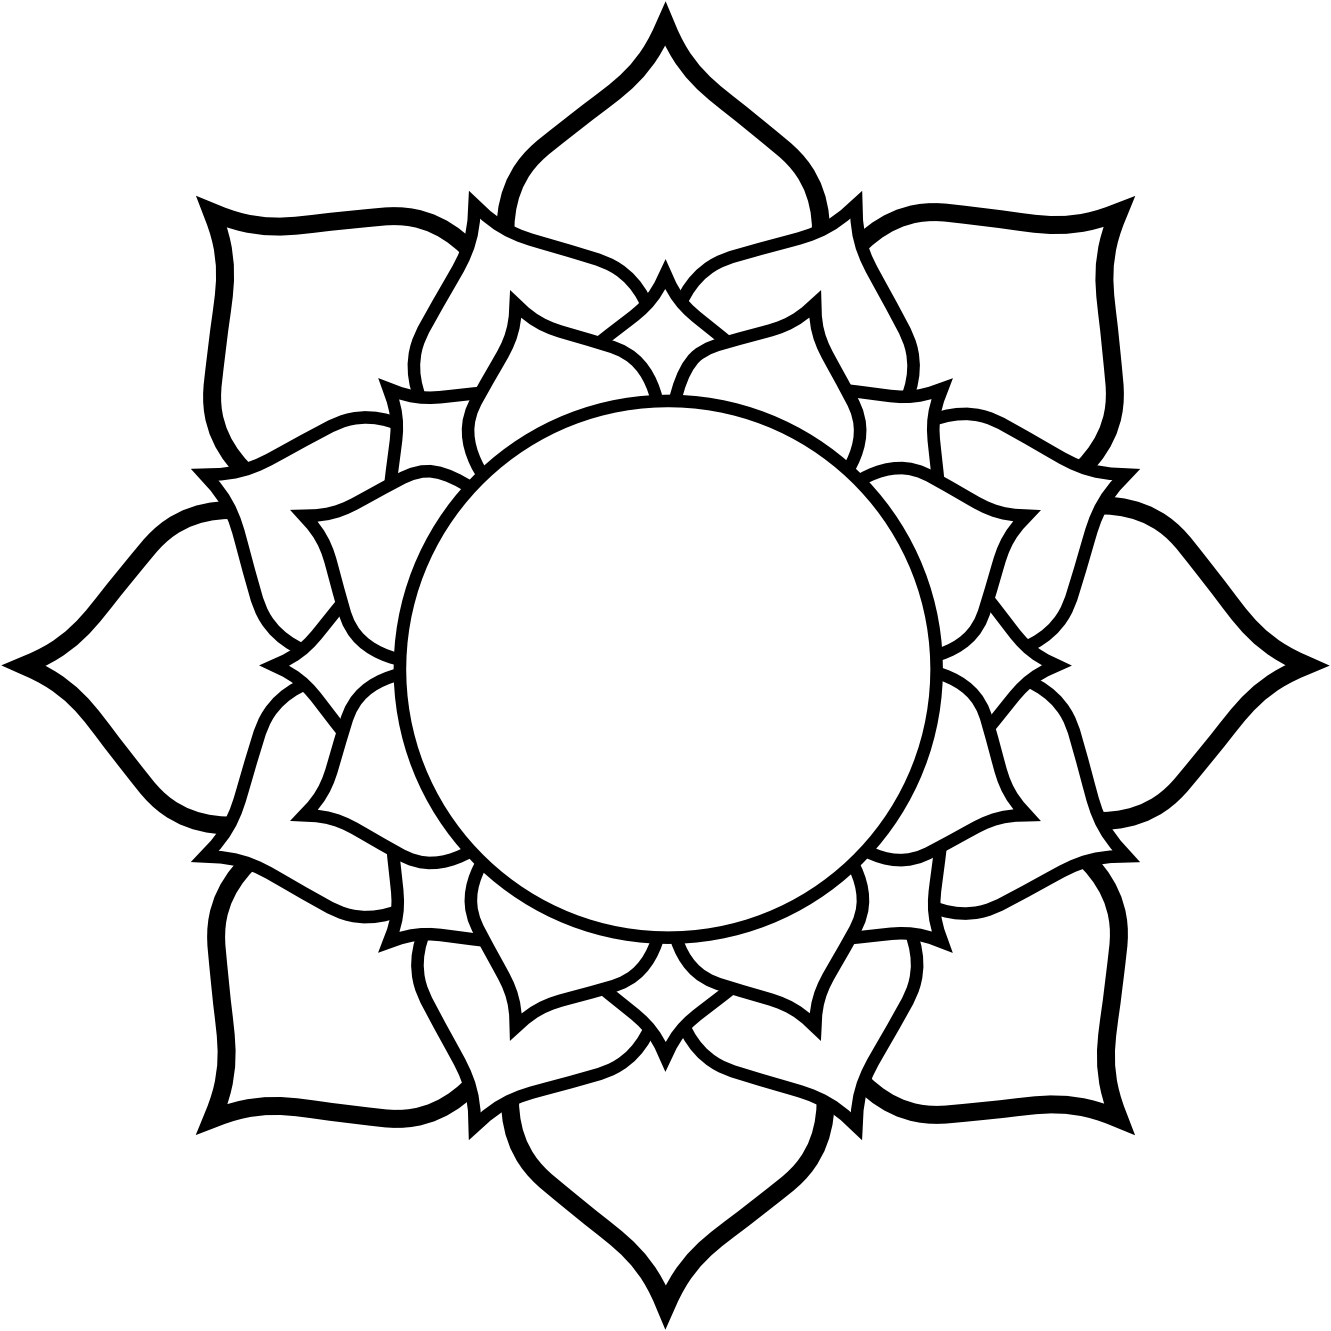 Black and White Lotus Logo - Free Lotus Flower Line Drawing, Download Free Clip Art, Free Clip ...